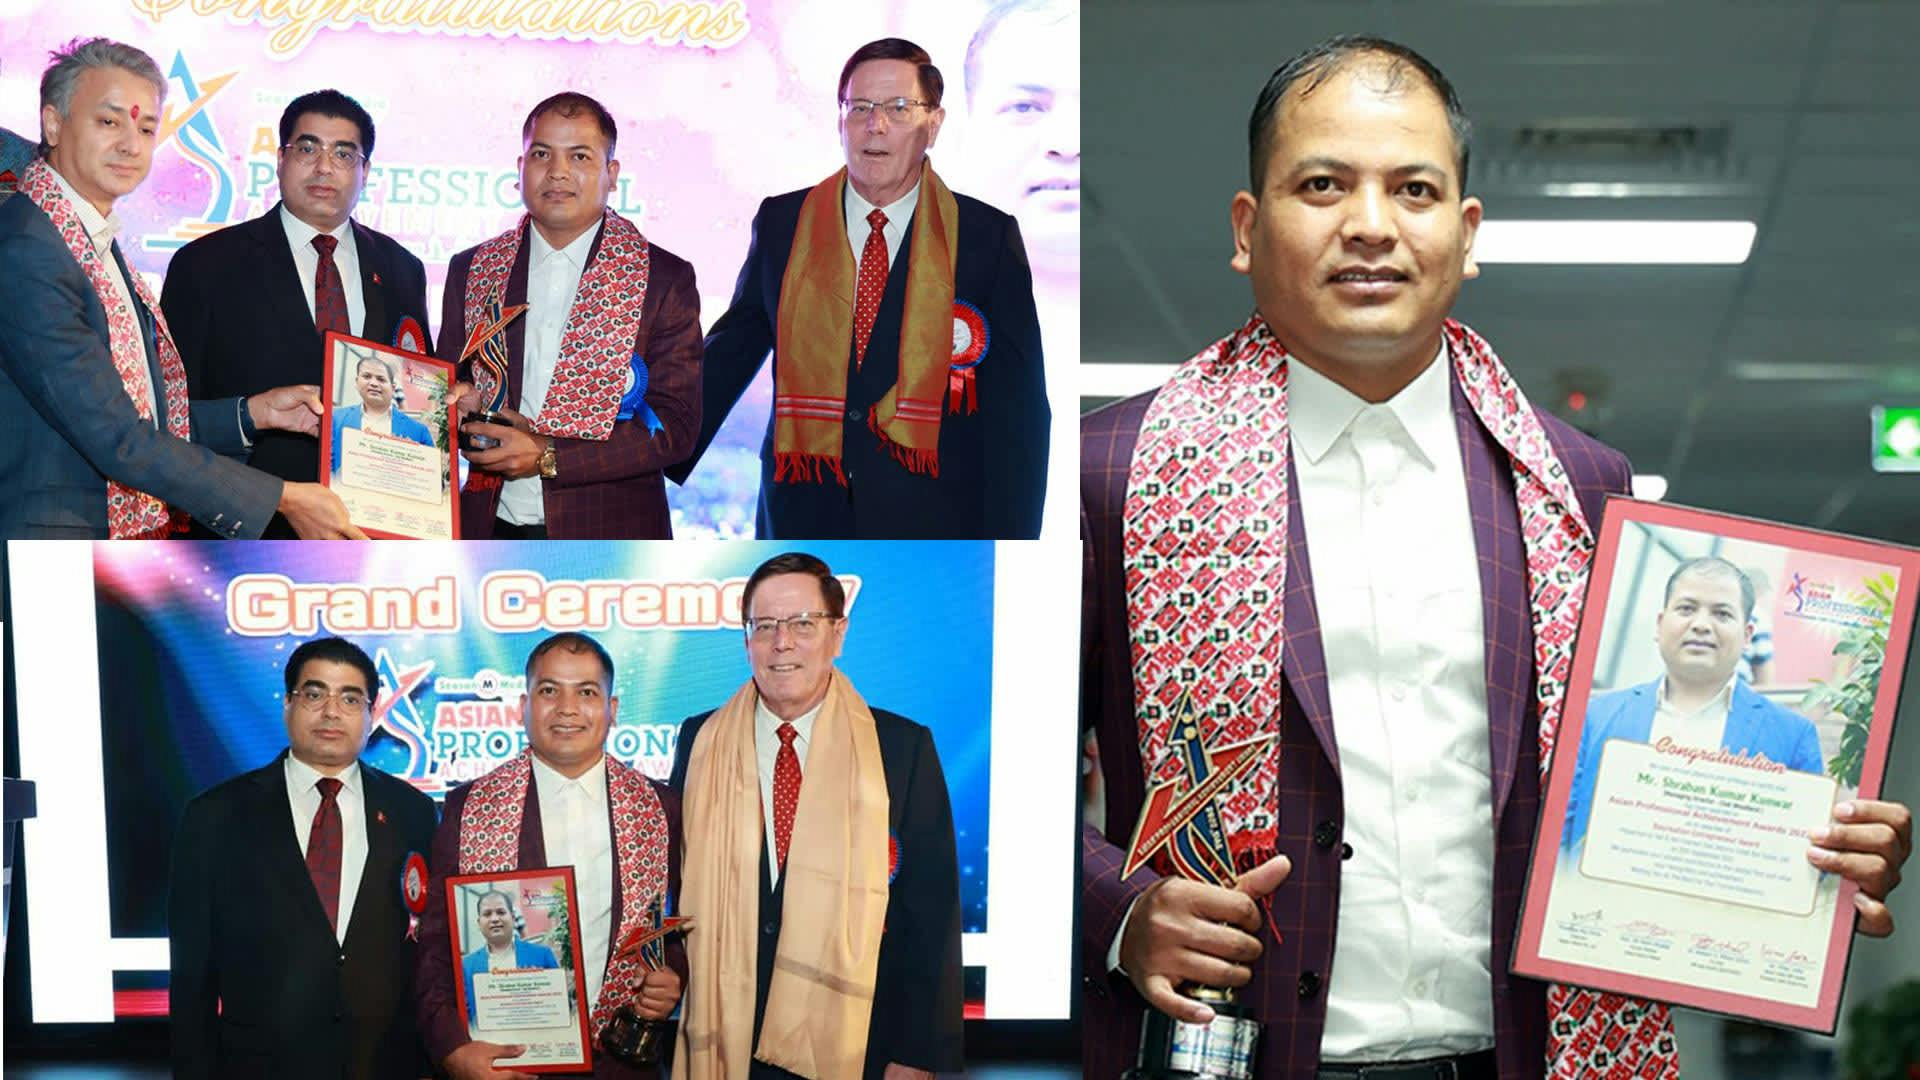 Recreation Entrepreneur Award to successful young businessman Shraban Kumar